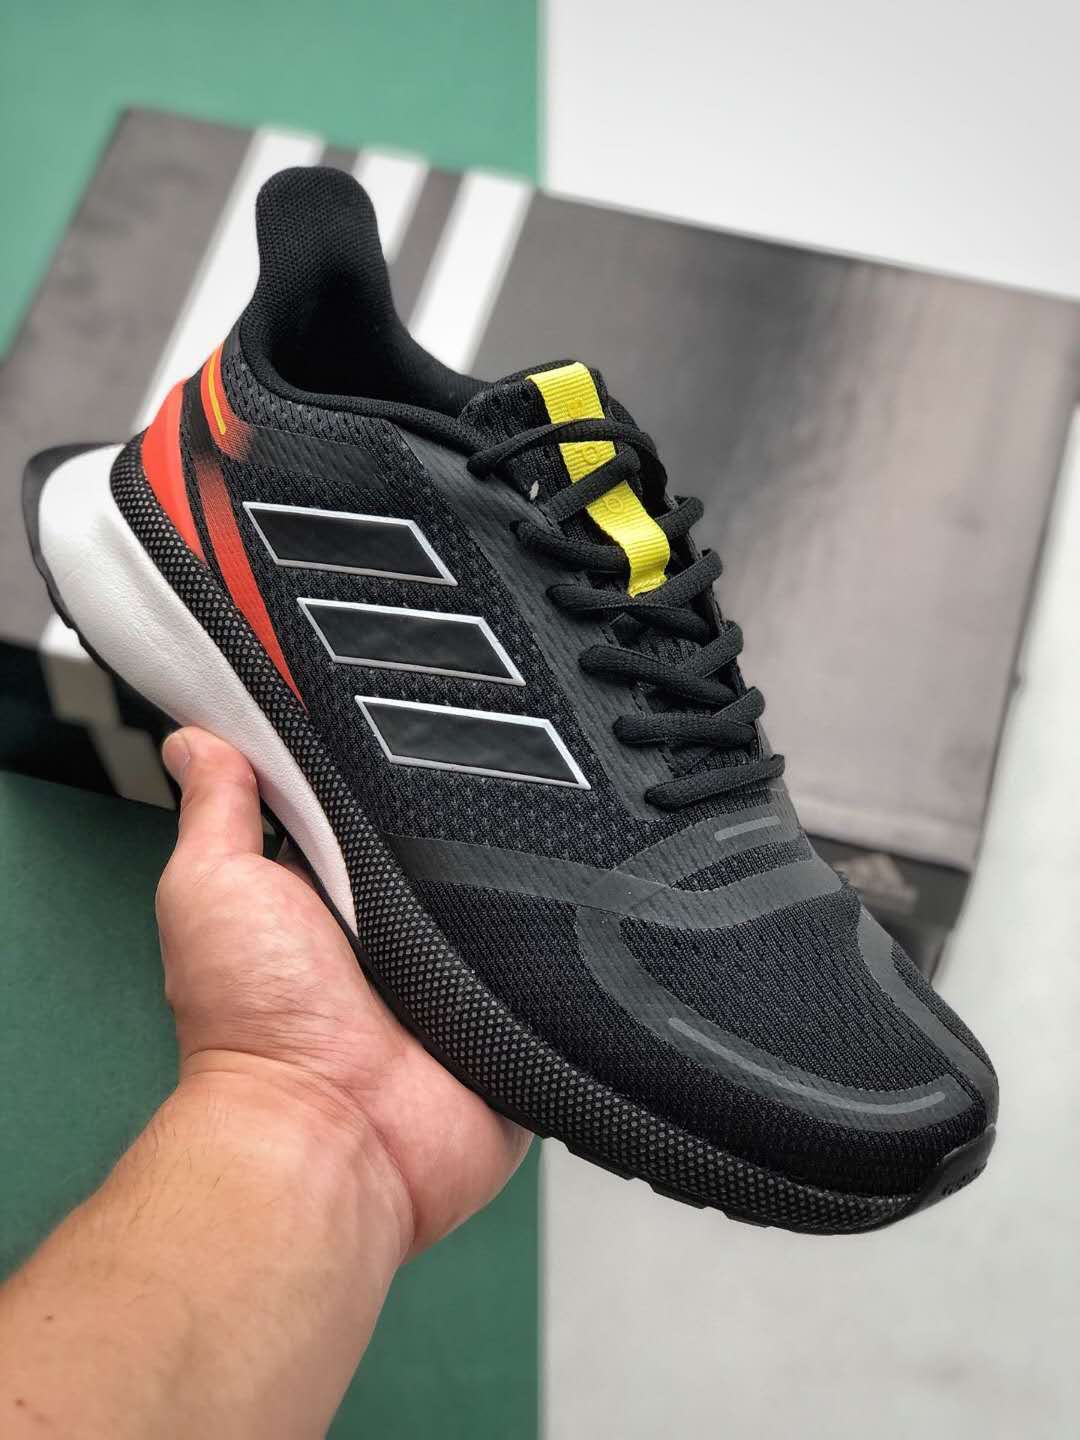 Adidas Nova Run Black EG3165 - Stylish and Functional Running Shoes